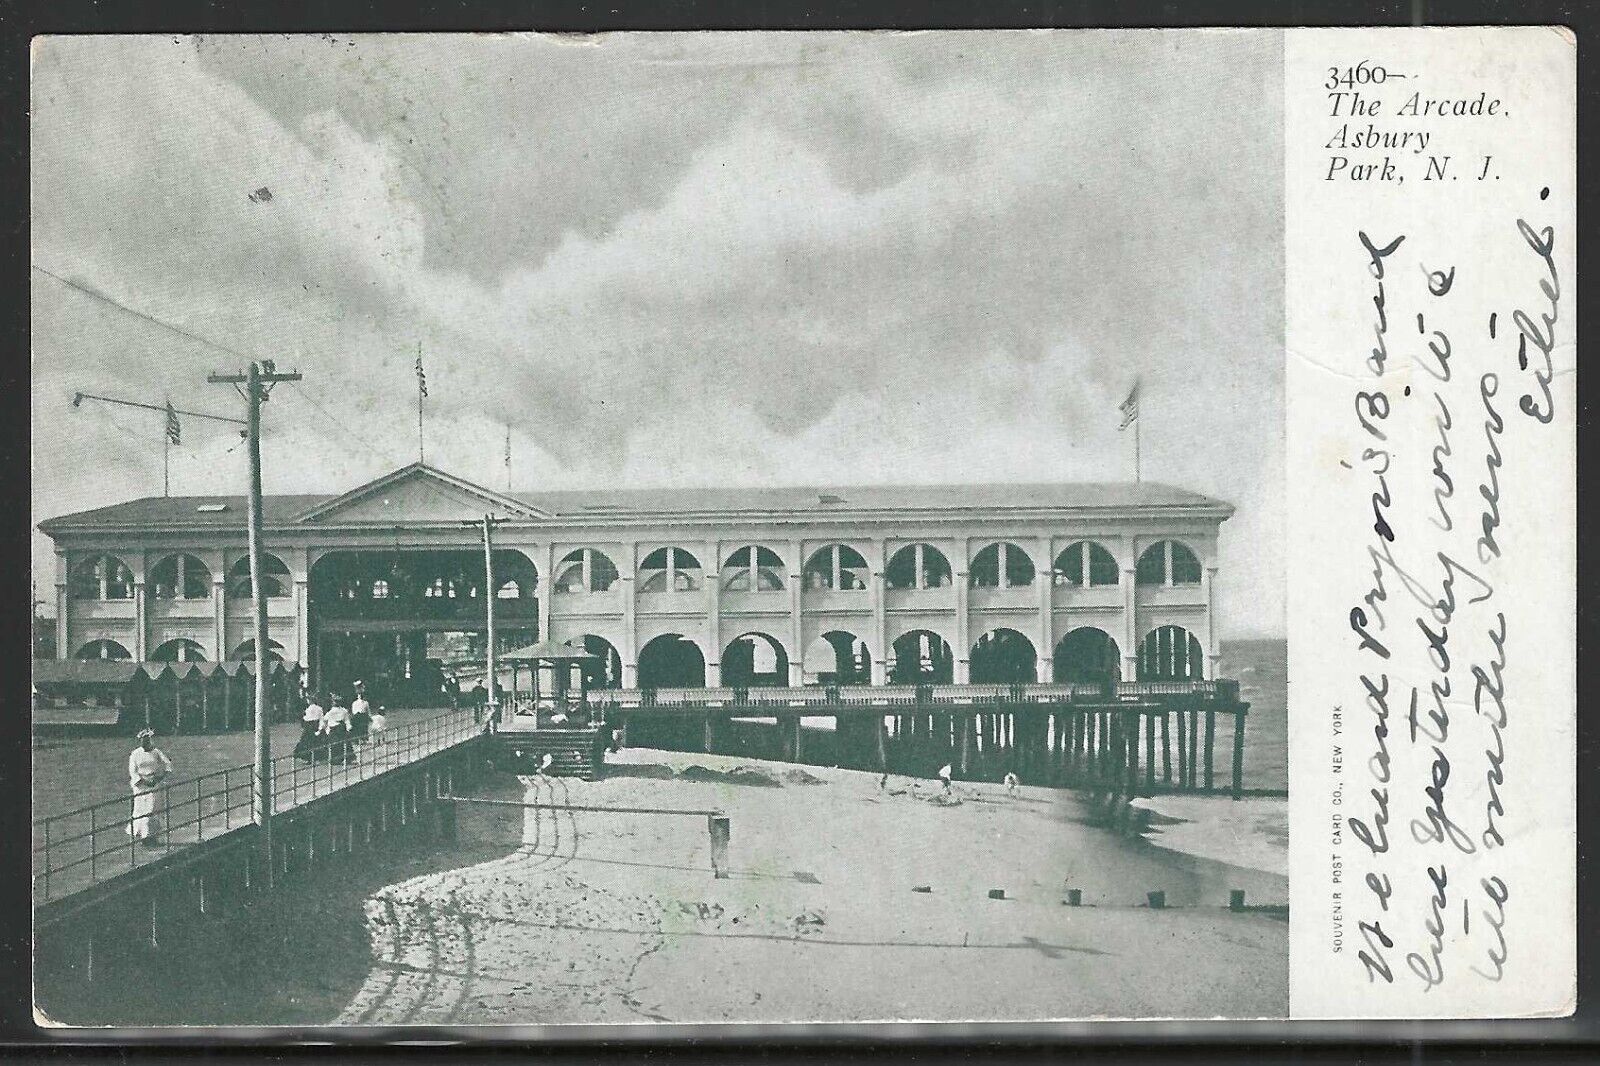 The Arcade, Asbury Park, N.J., Very Early Postcard, Used in 1905